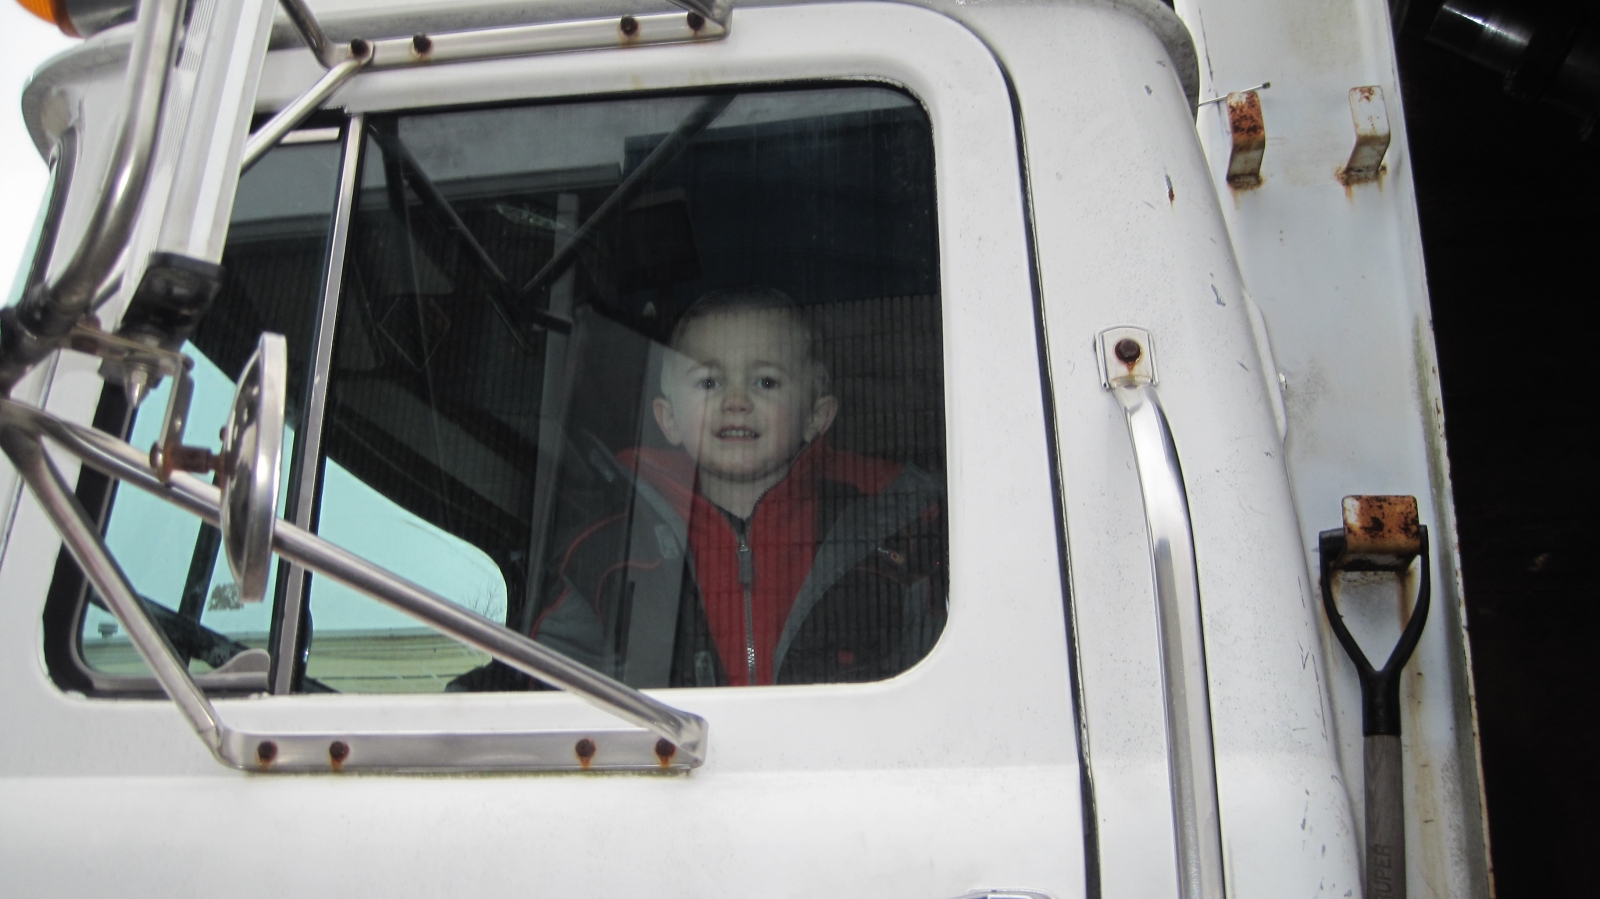 son in truck